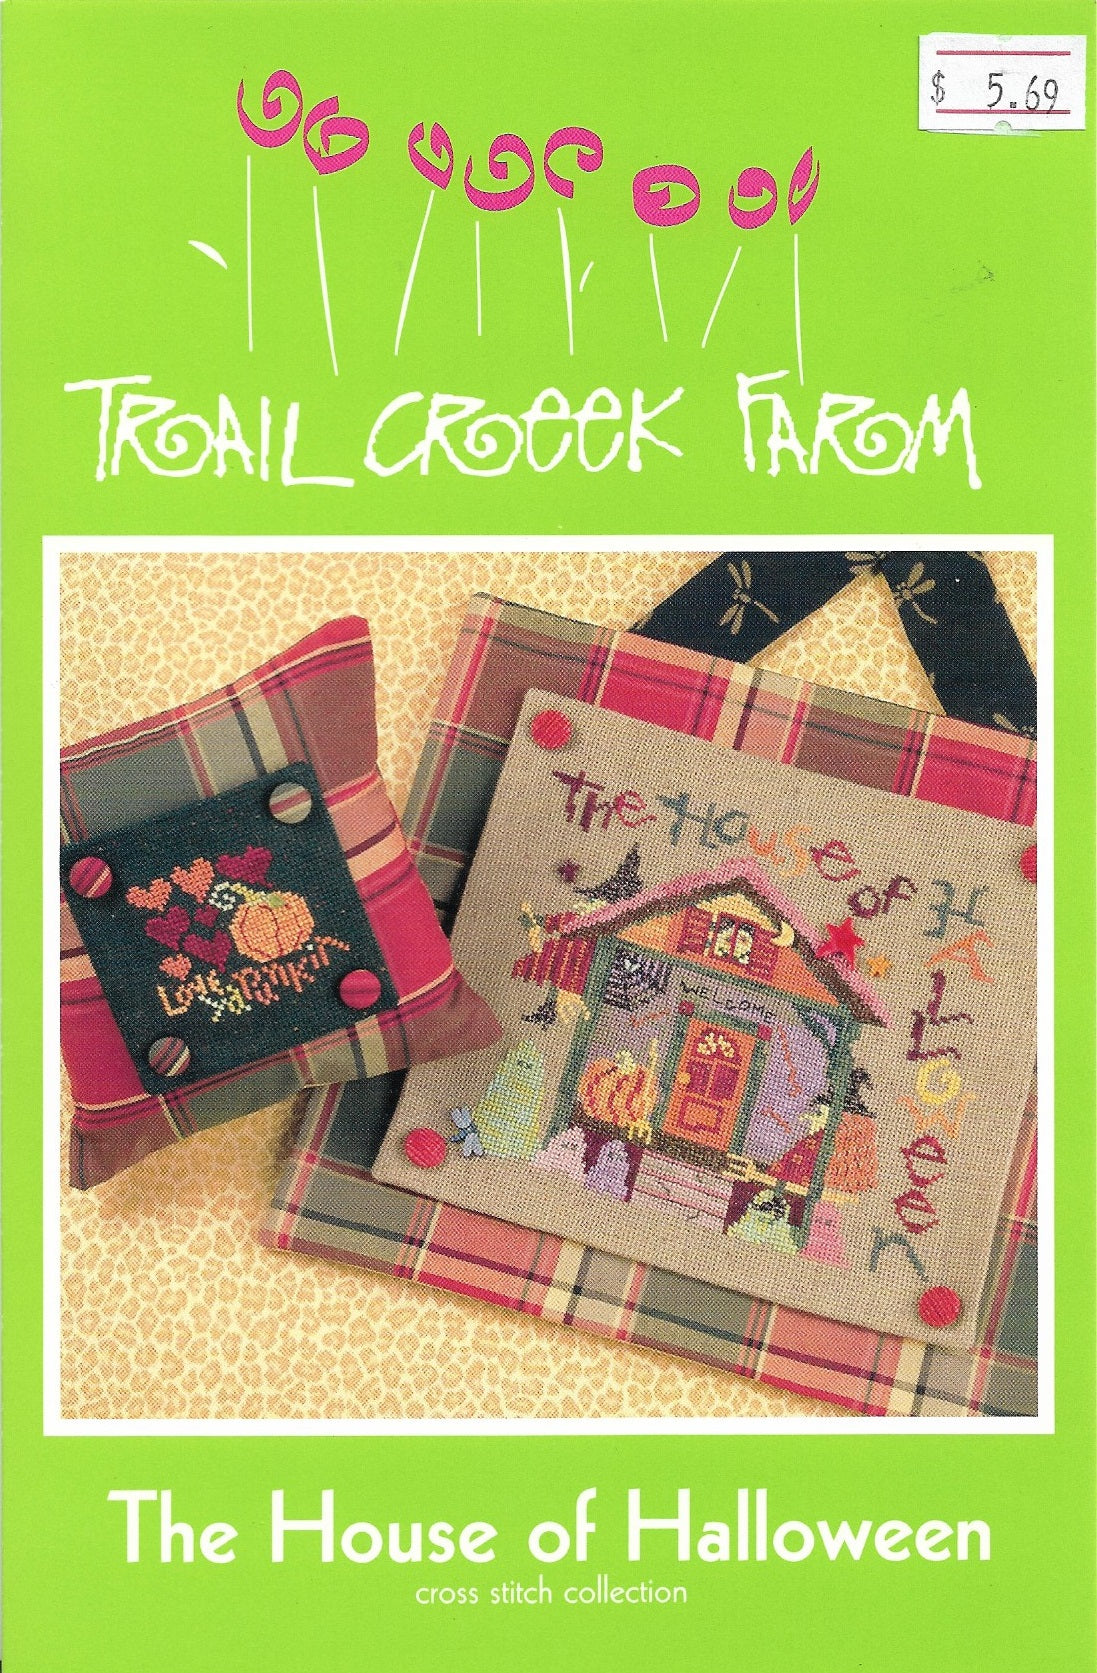 Trail Creek farm The House of Halloween cross stitch pattern